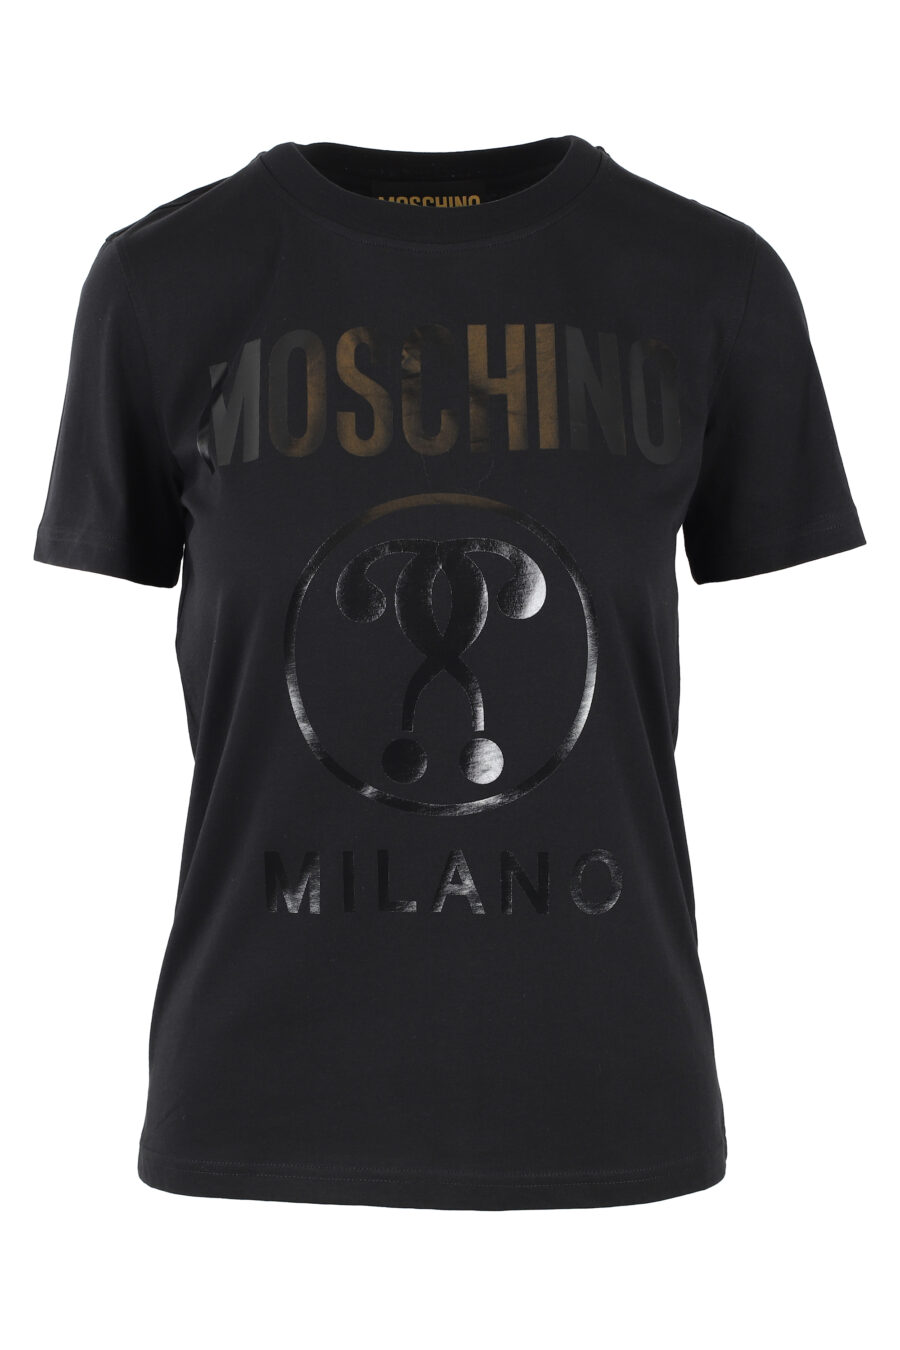 Camiseta negra con logo monocromático - IMG 5041